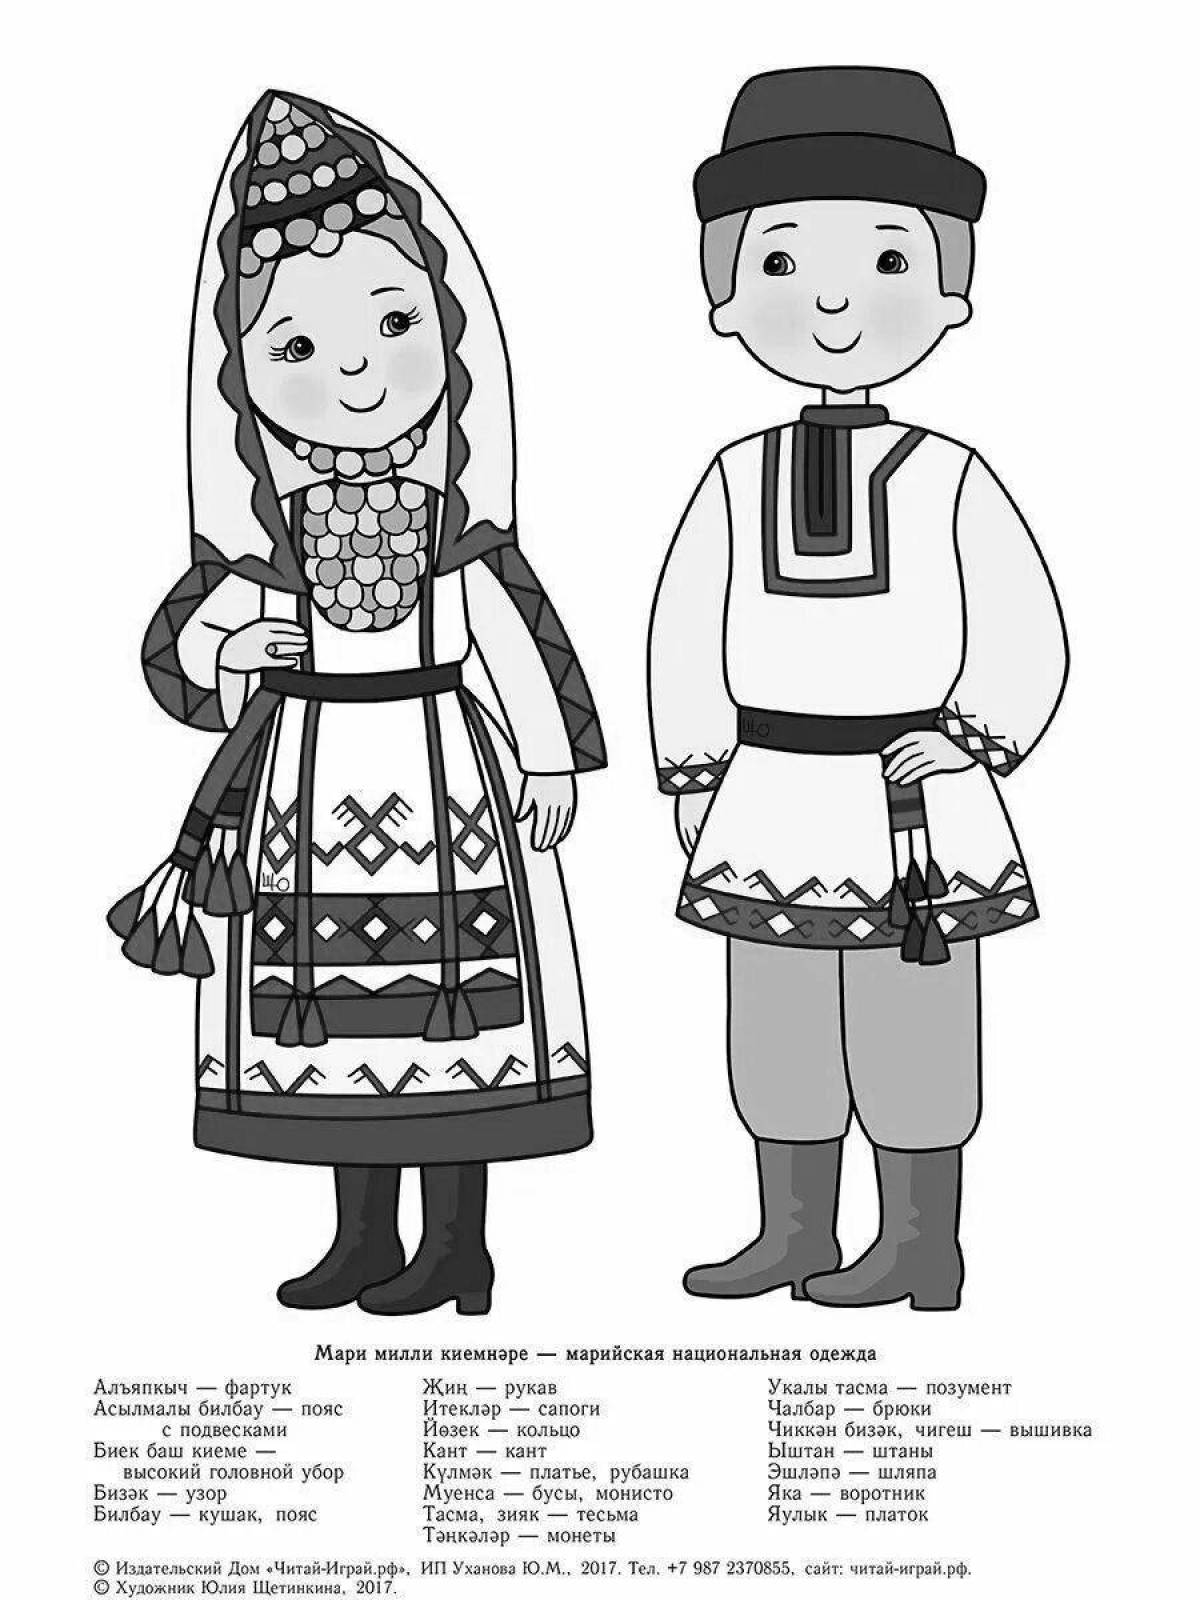 Fashionable Chuvash national costume for children